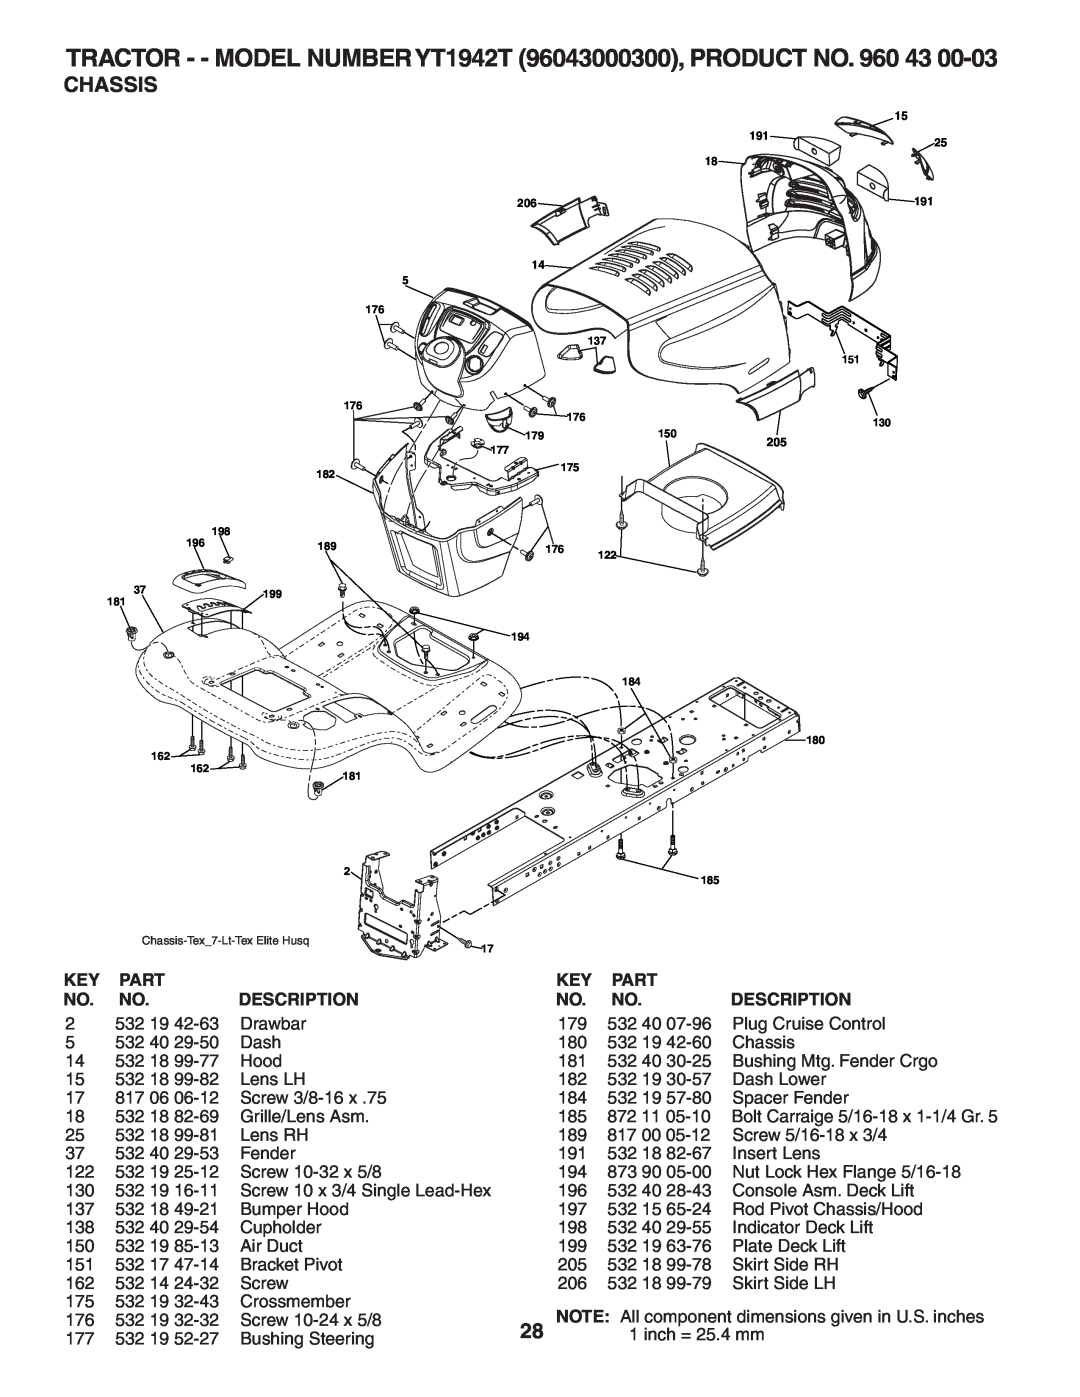 Husqvarna YT1942T owner manual Chassis, Part, Description 